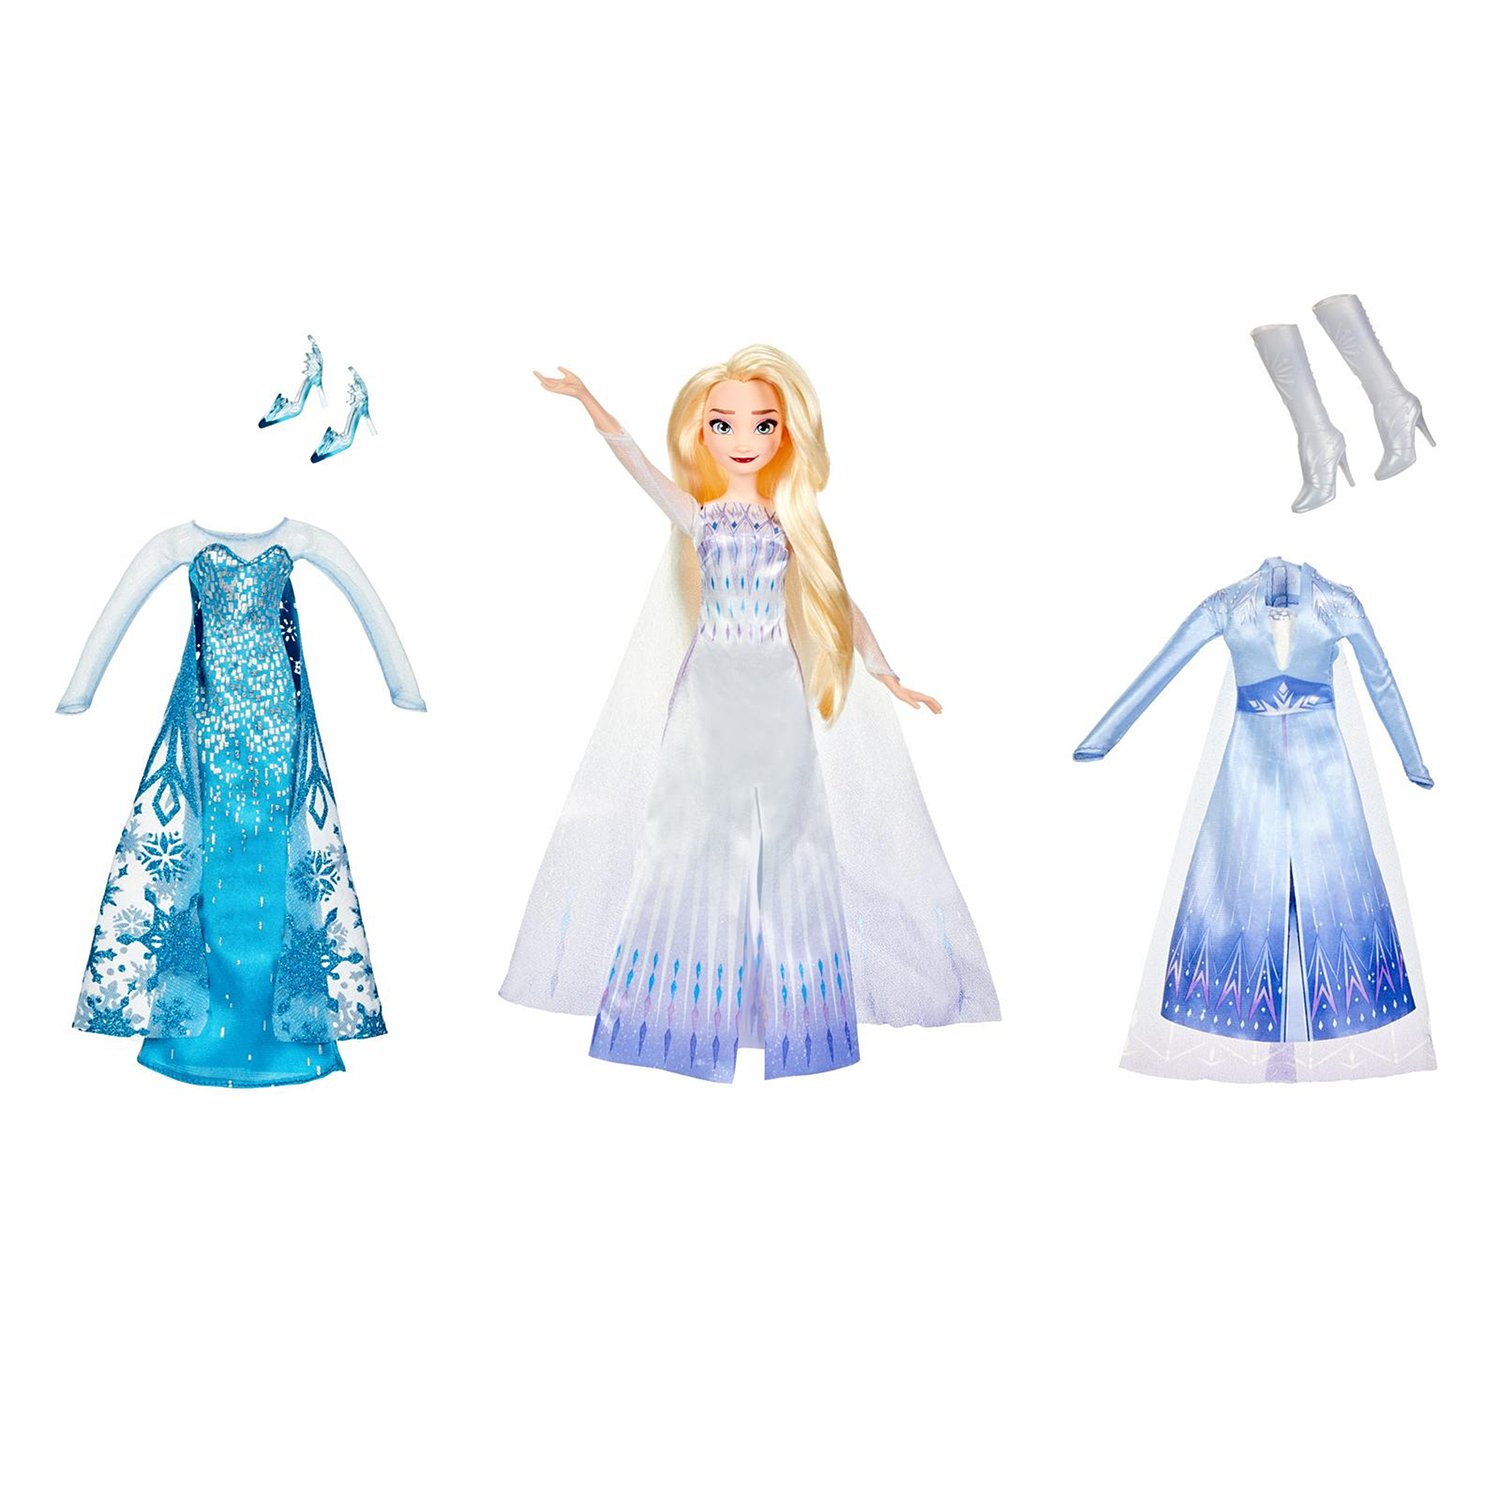 Кукла Disney Frozen E96695L0 Холодное Сердце 2 Эльза 2 наряда